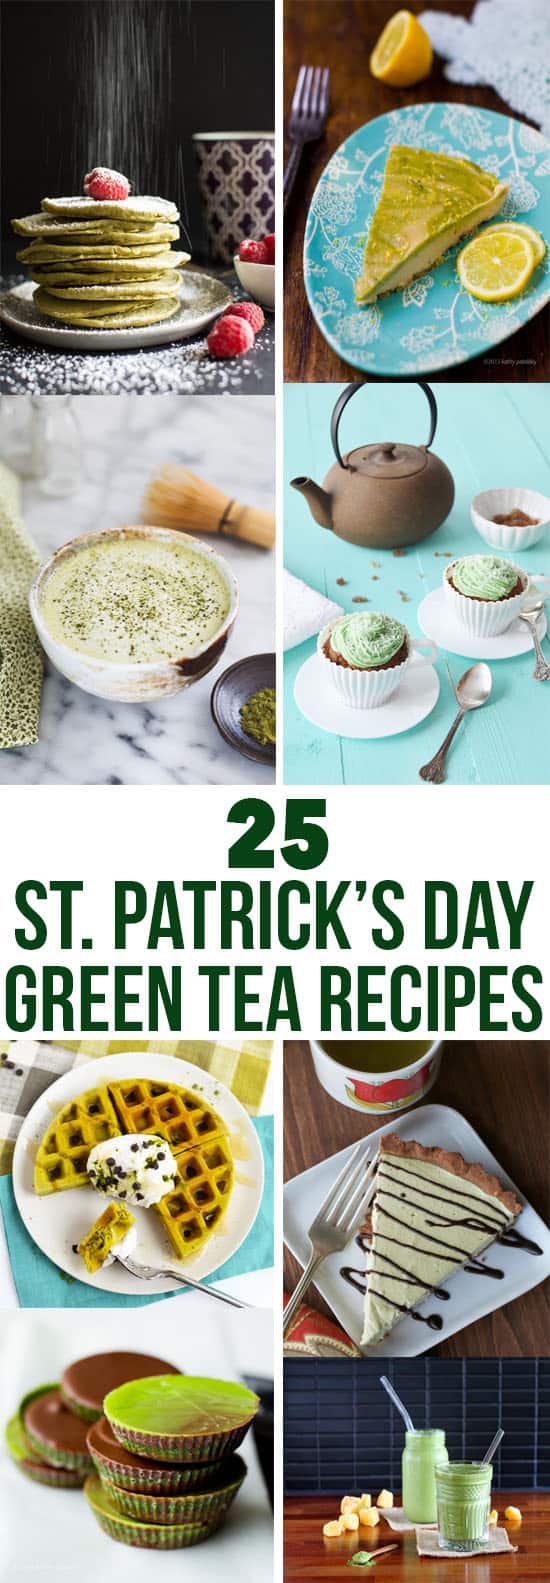 25 St. Patrick's Day Green Tea Recipes | clube.futebolmilionario.com